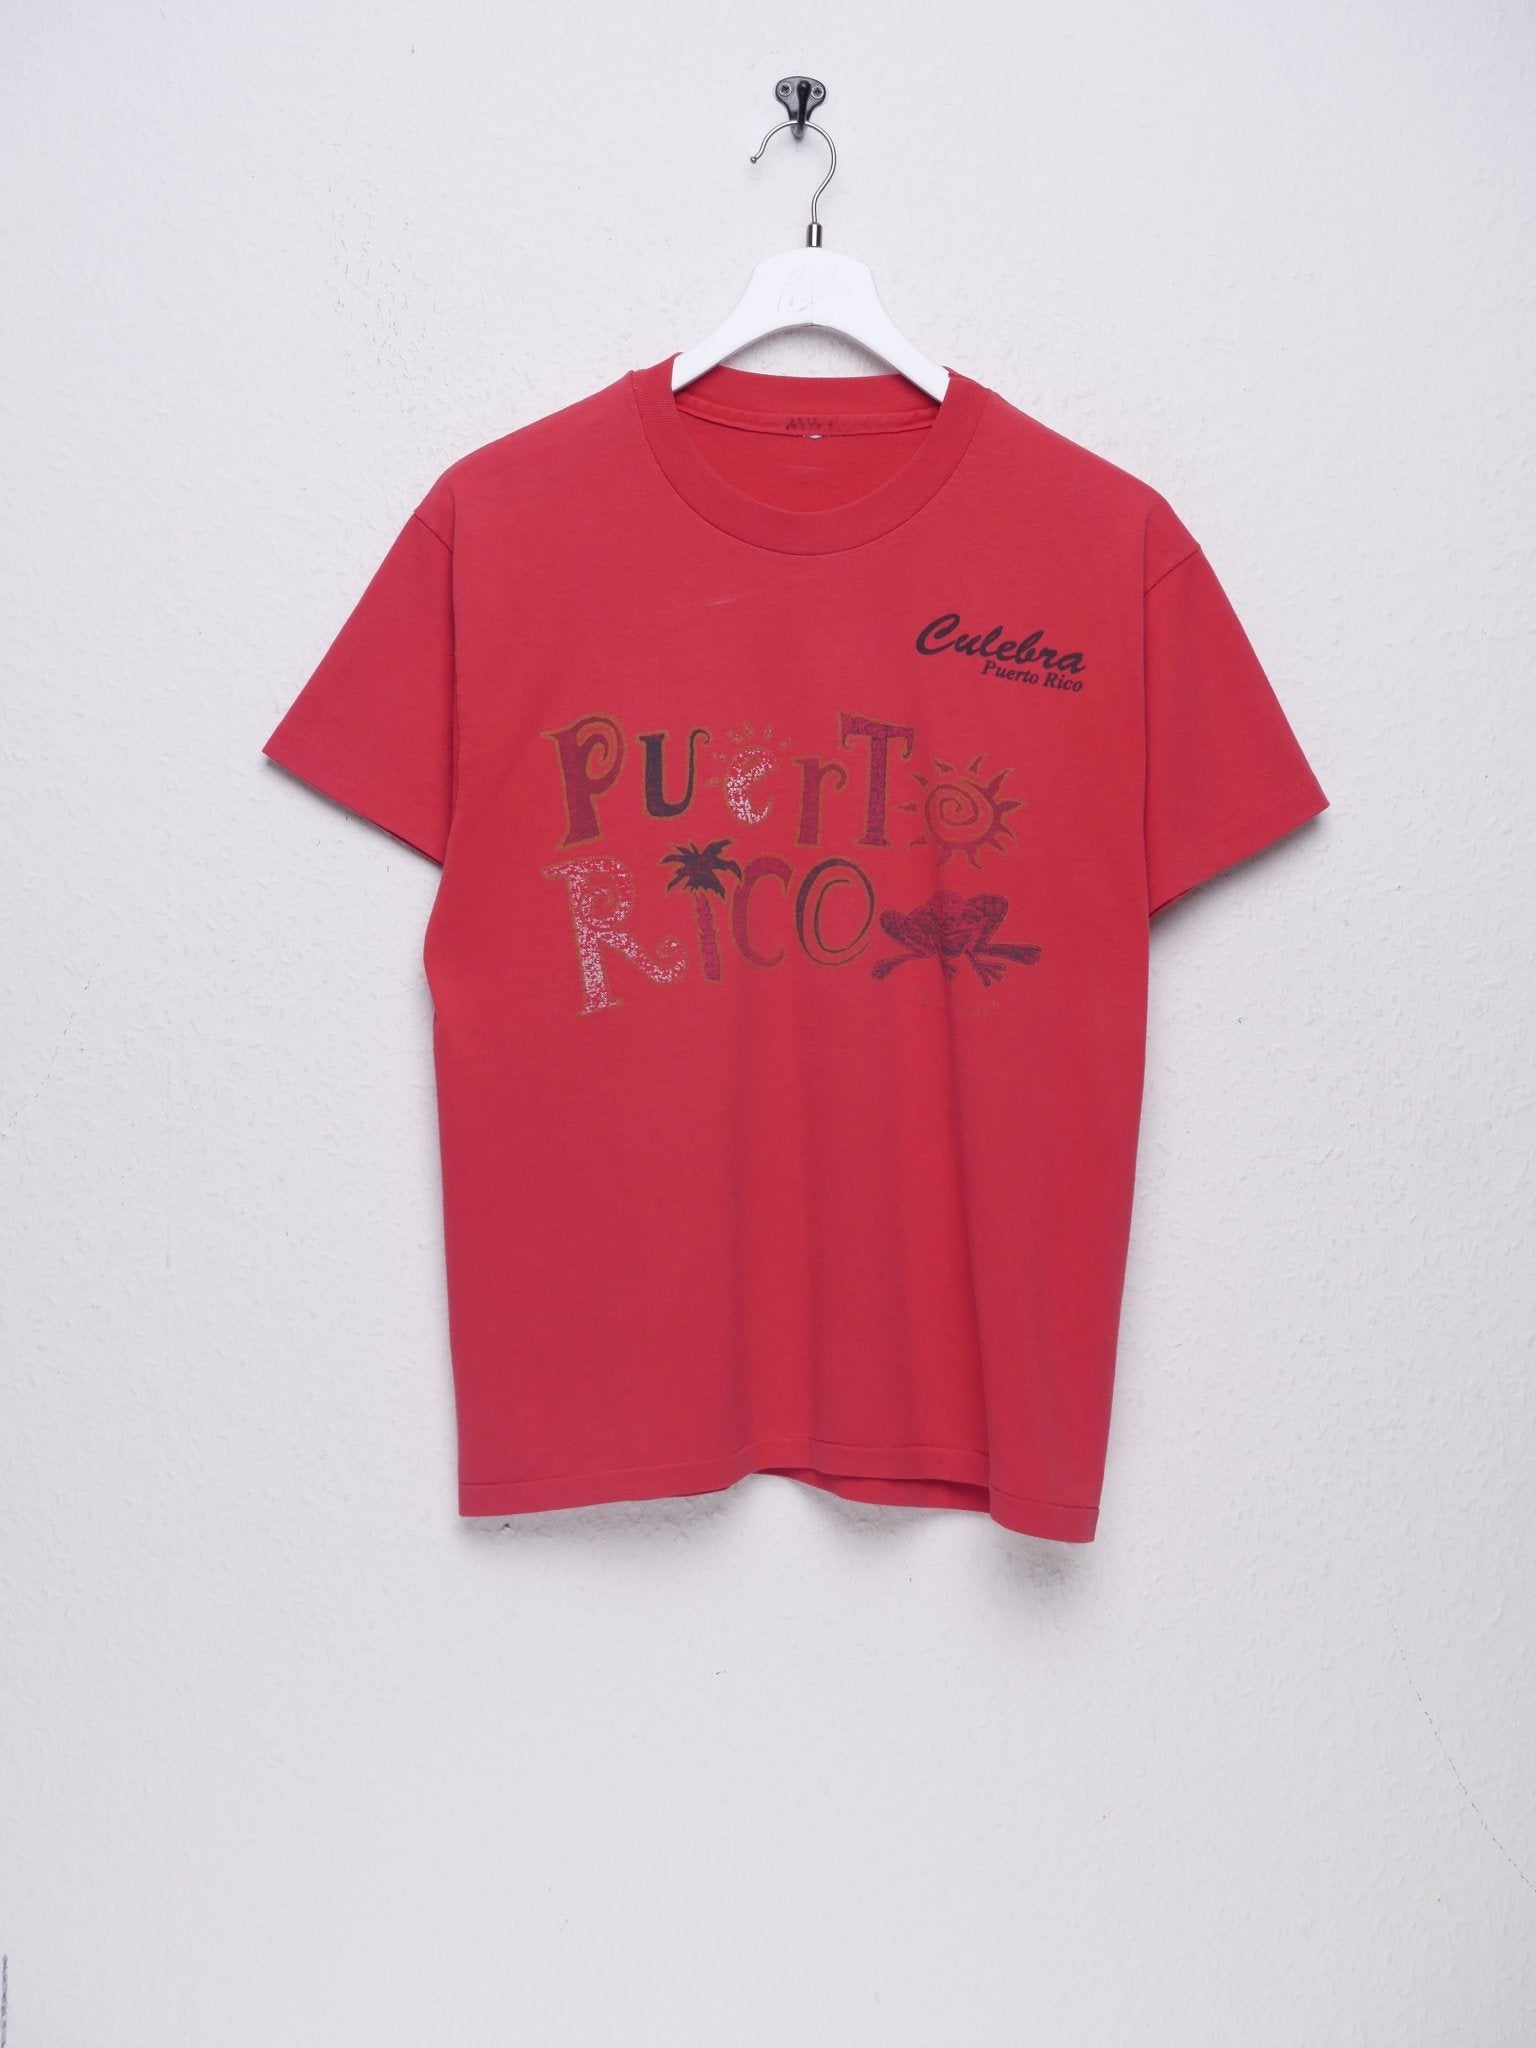 'Puerto Rico' printed red Shirt - Peeces